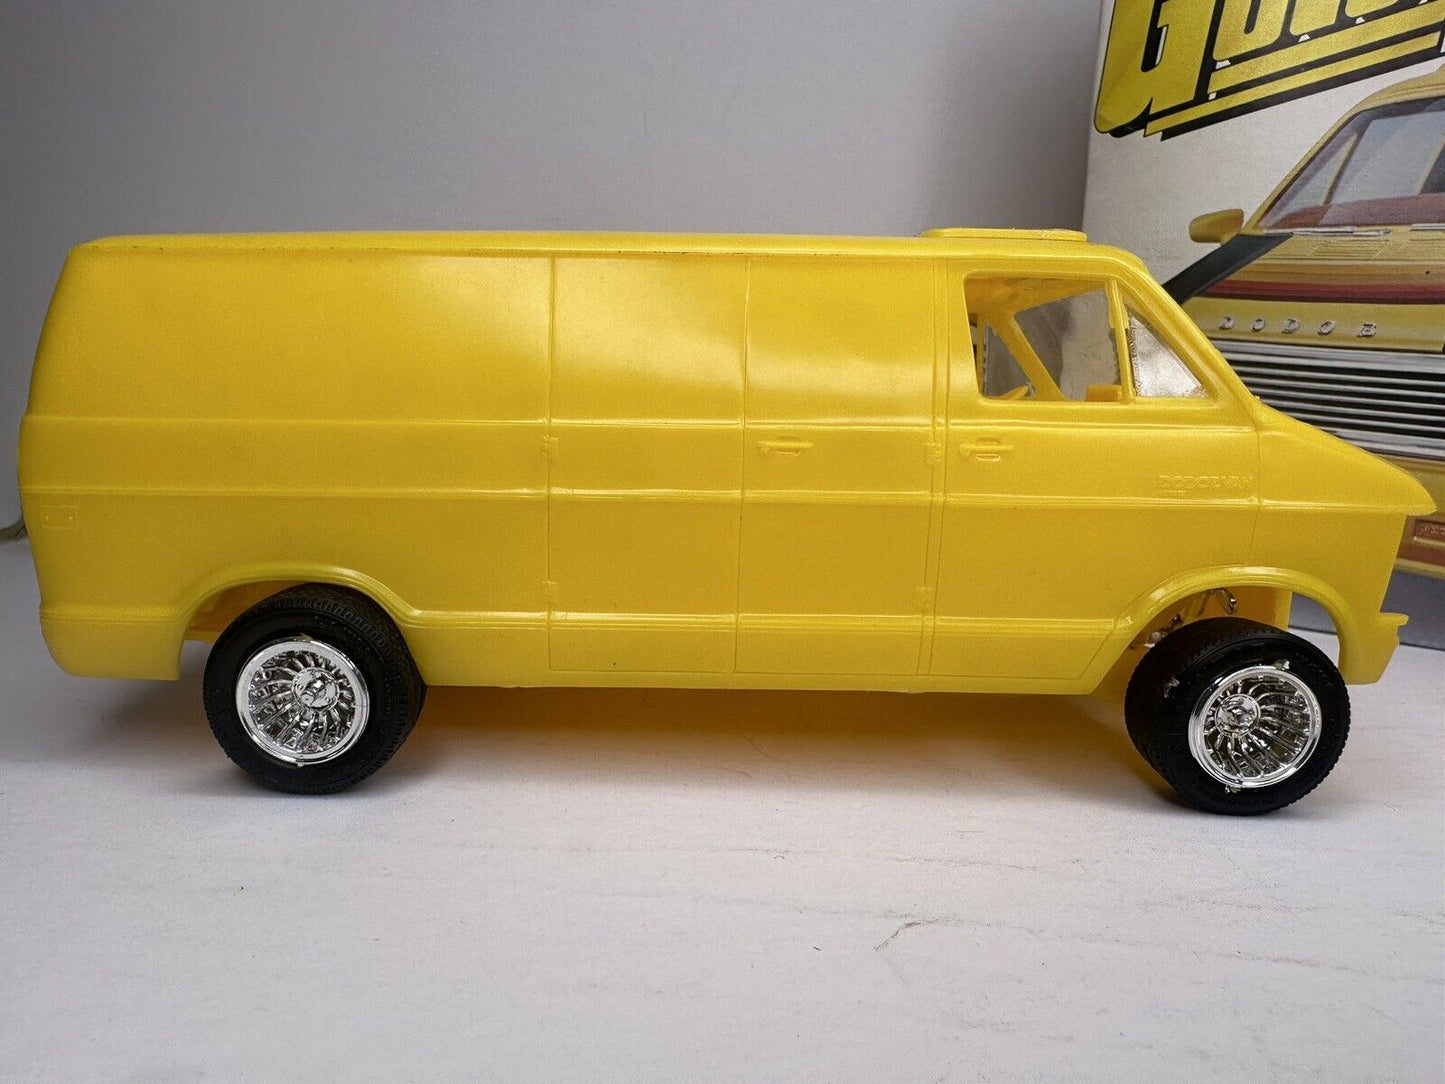 1978 Vintage MPC 1/25 Gold Rush Custom Dodge Van Model Kit - Complete with Original Box #1-0423 - TreasuTiques